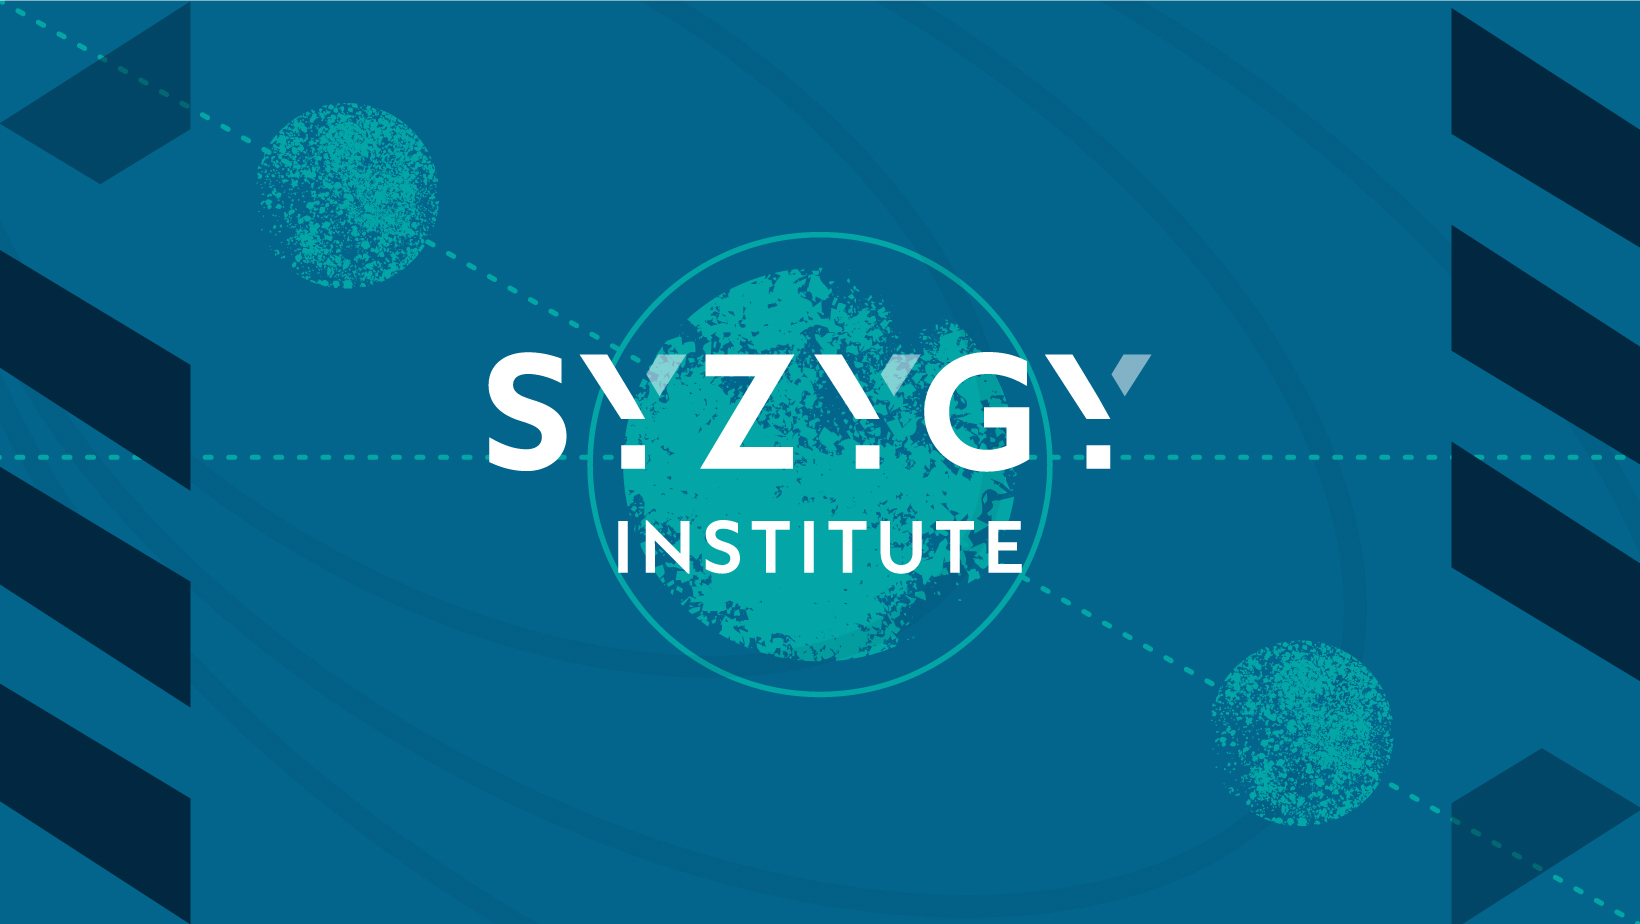 Syzygy Institute LLC